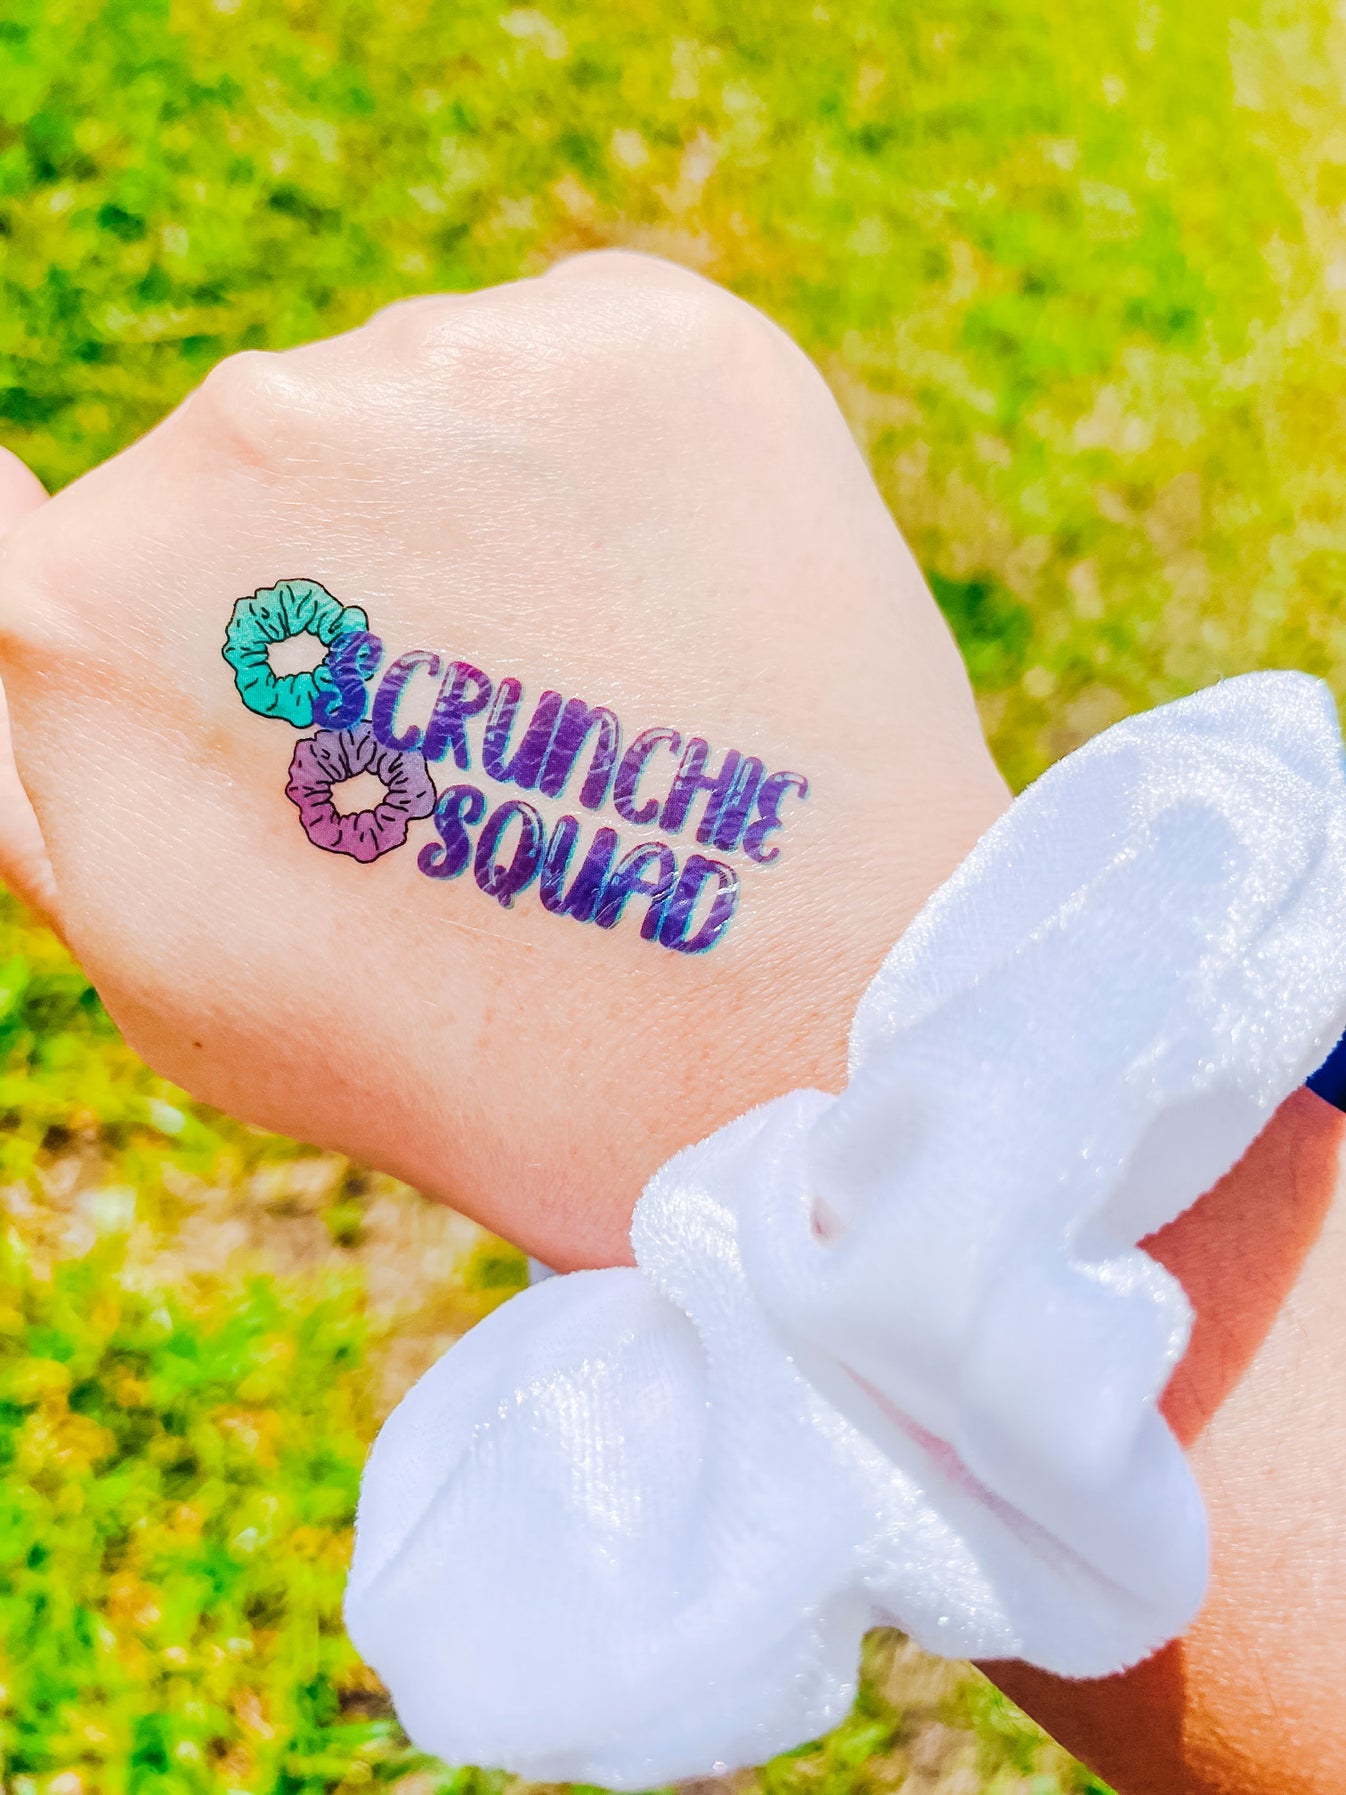 Scrunchie Squad Temporary Tattoos